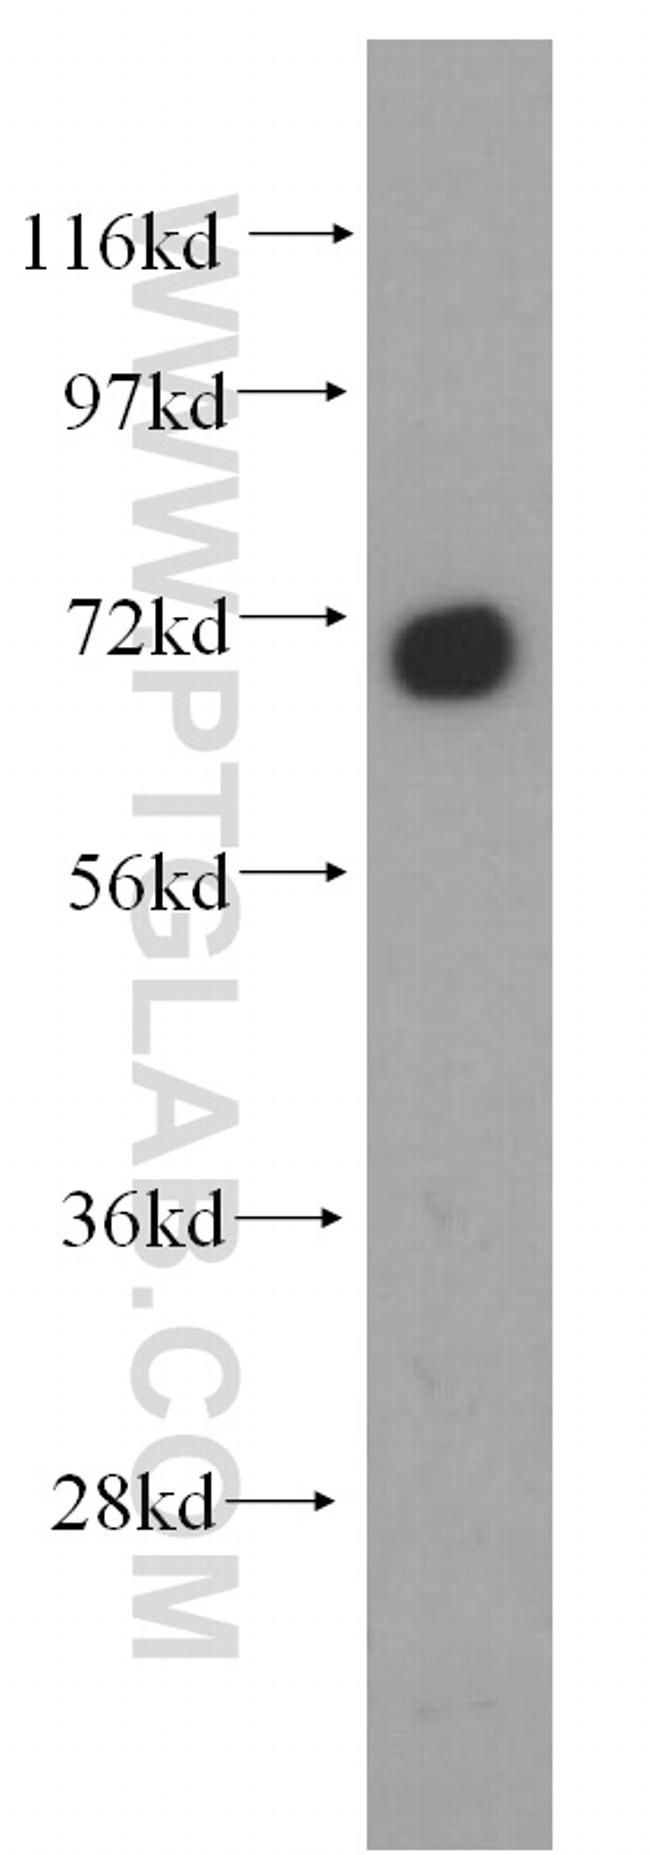 GNPAT Antibody in Western Blot (WB)